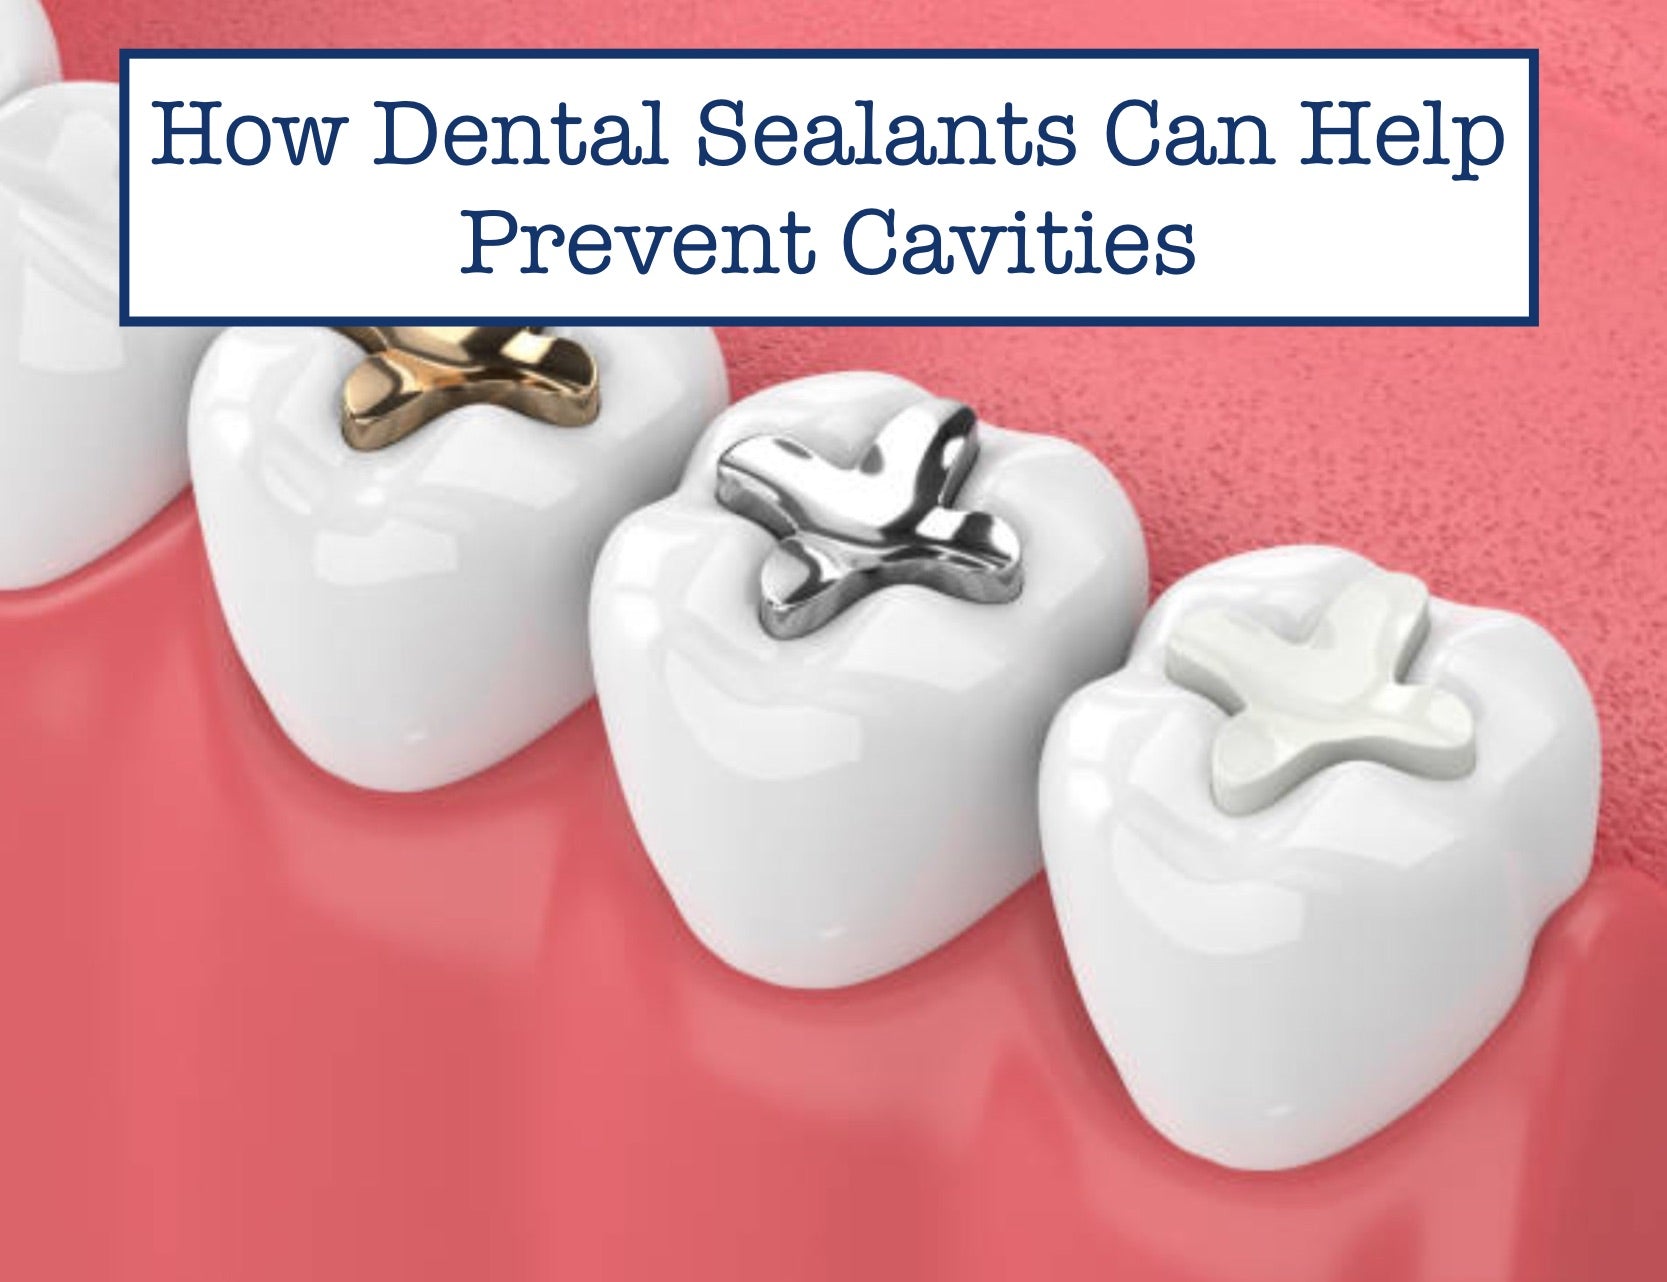 How Dental Sealants Can Help Prevent Cavities?